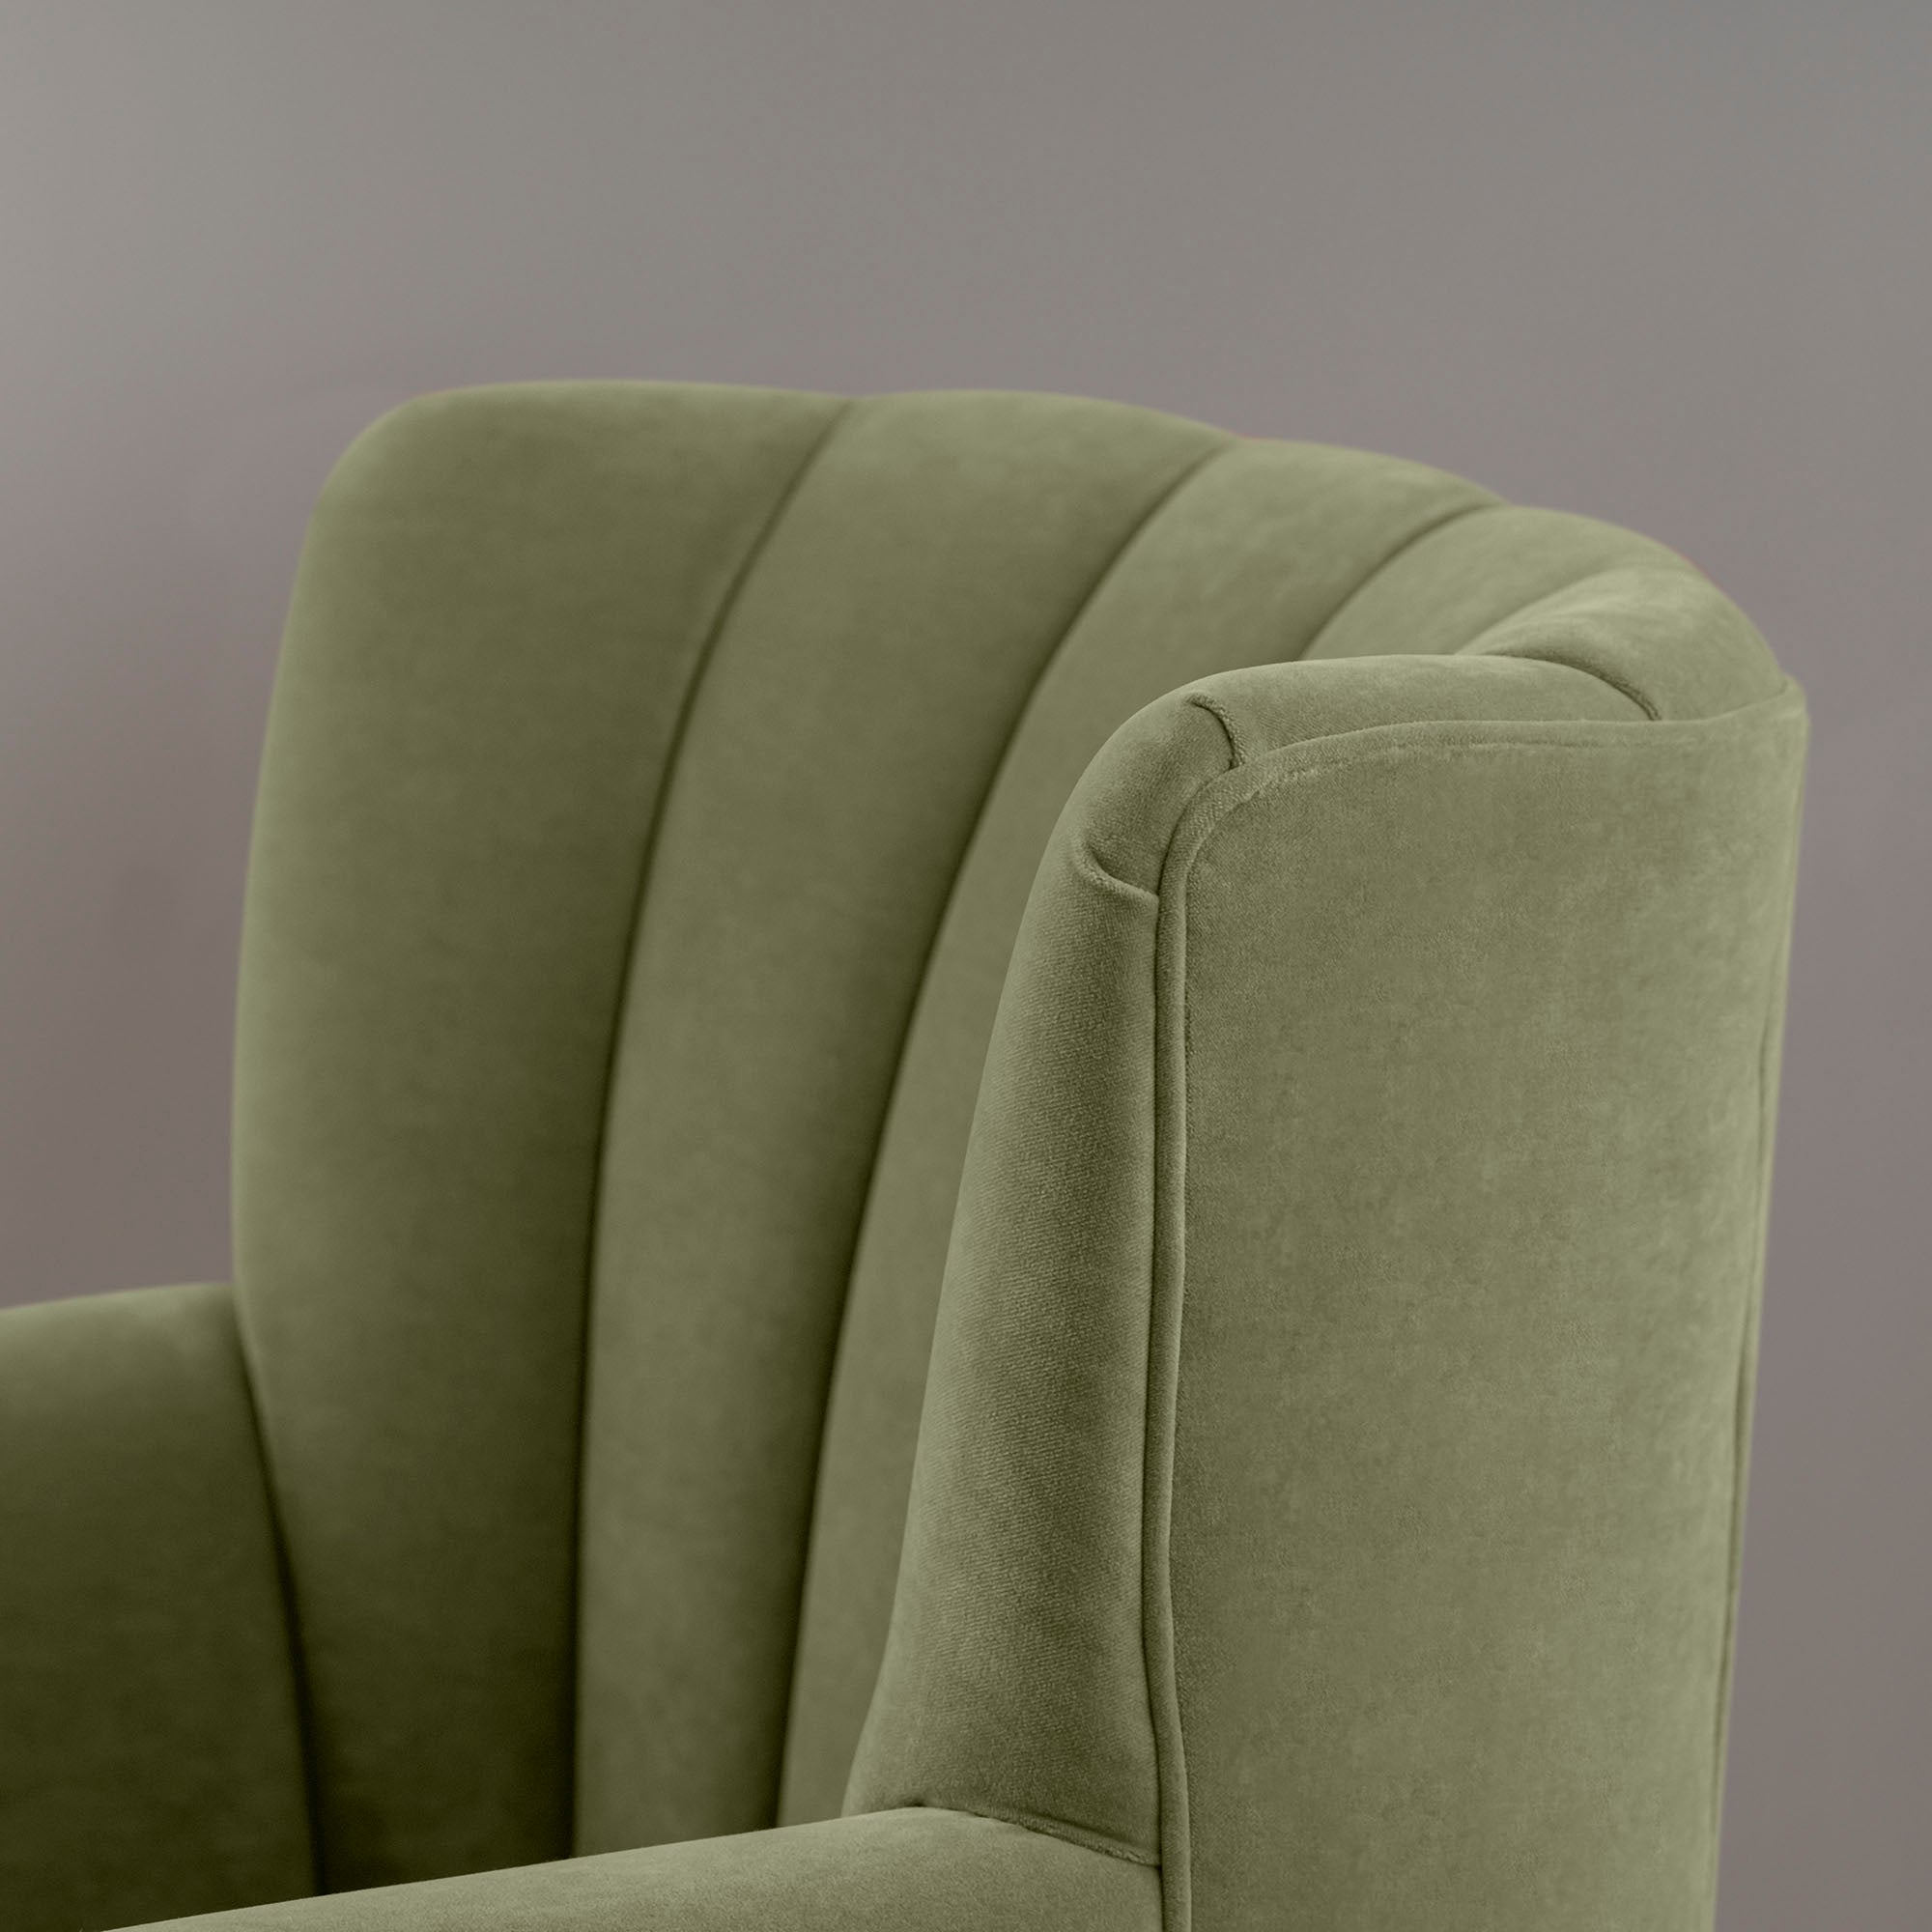  Time Out Armchair in Intelligent Velvet Green Tea 